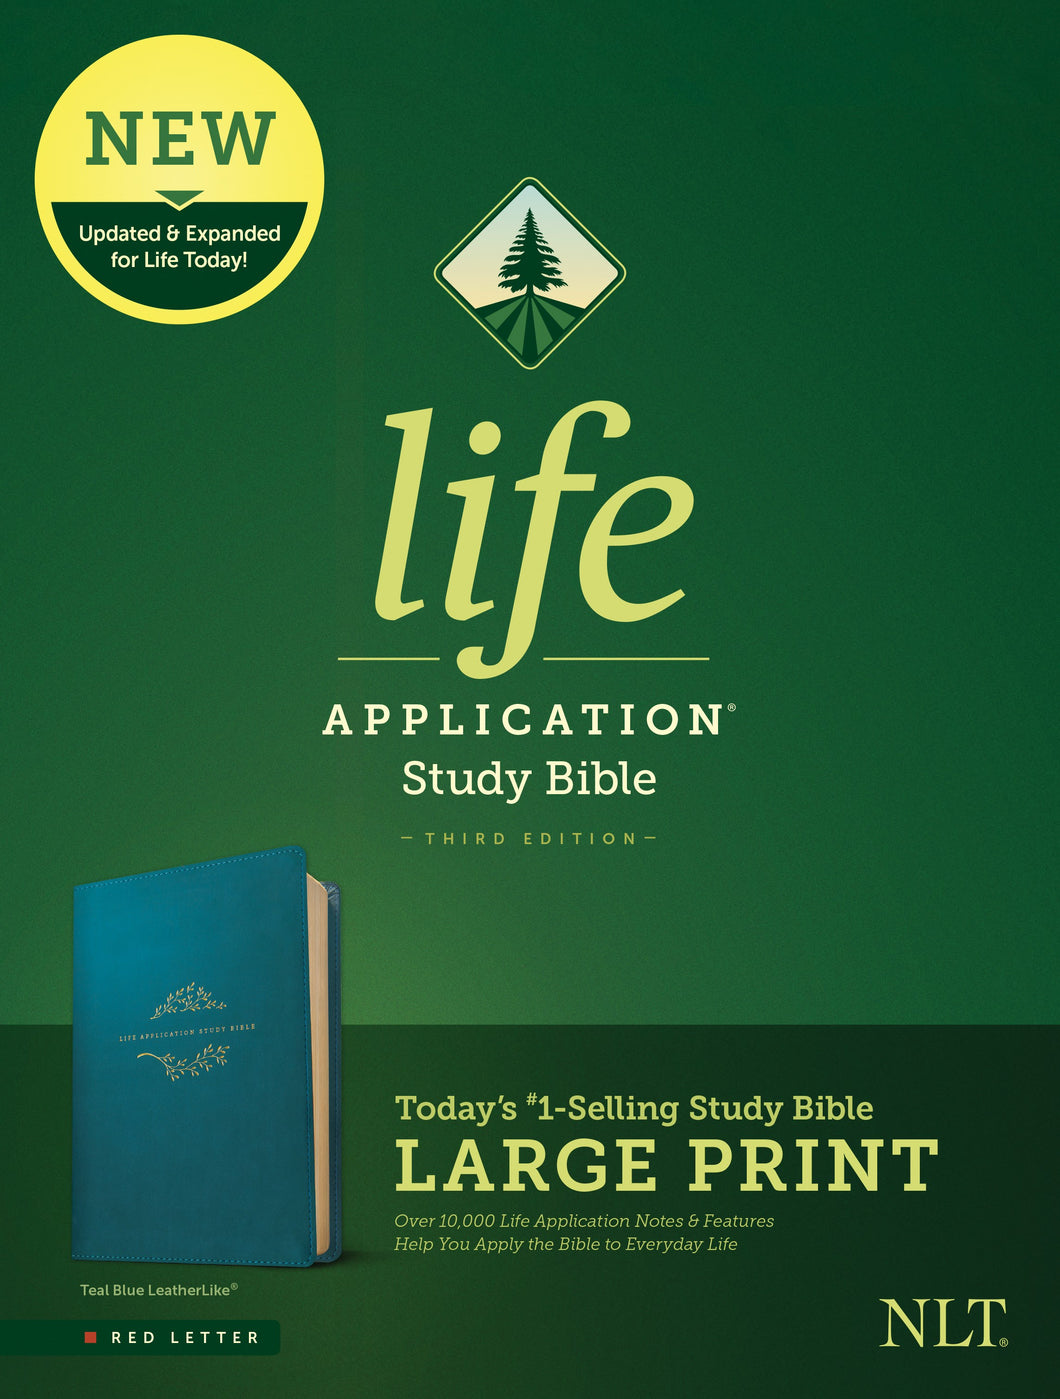 NLT Life Application Study Bible/Large Print (Third Edition) (RL)-Teal Blue LeatherLike